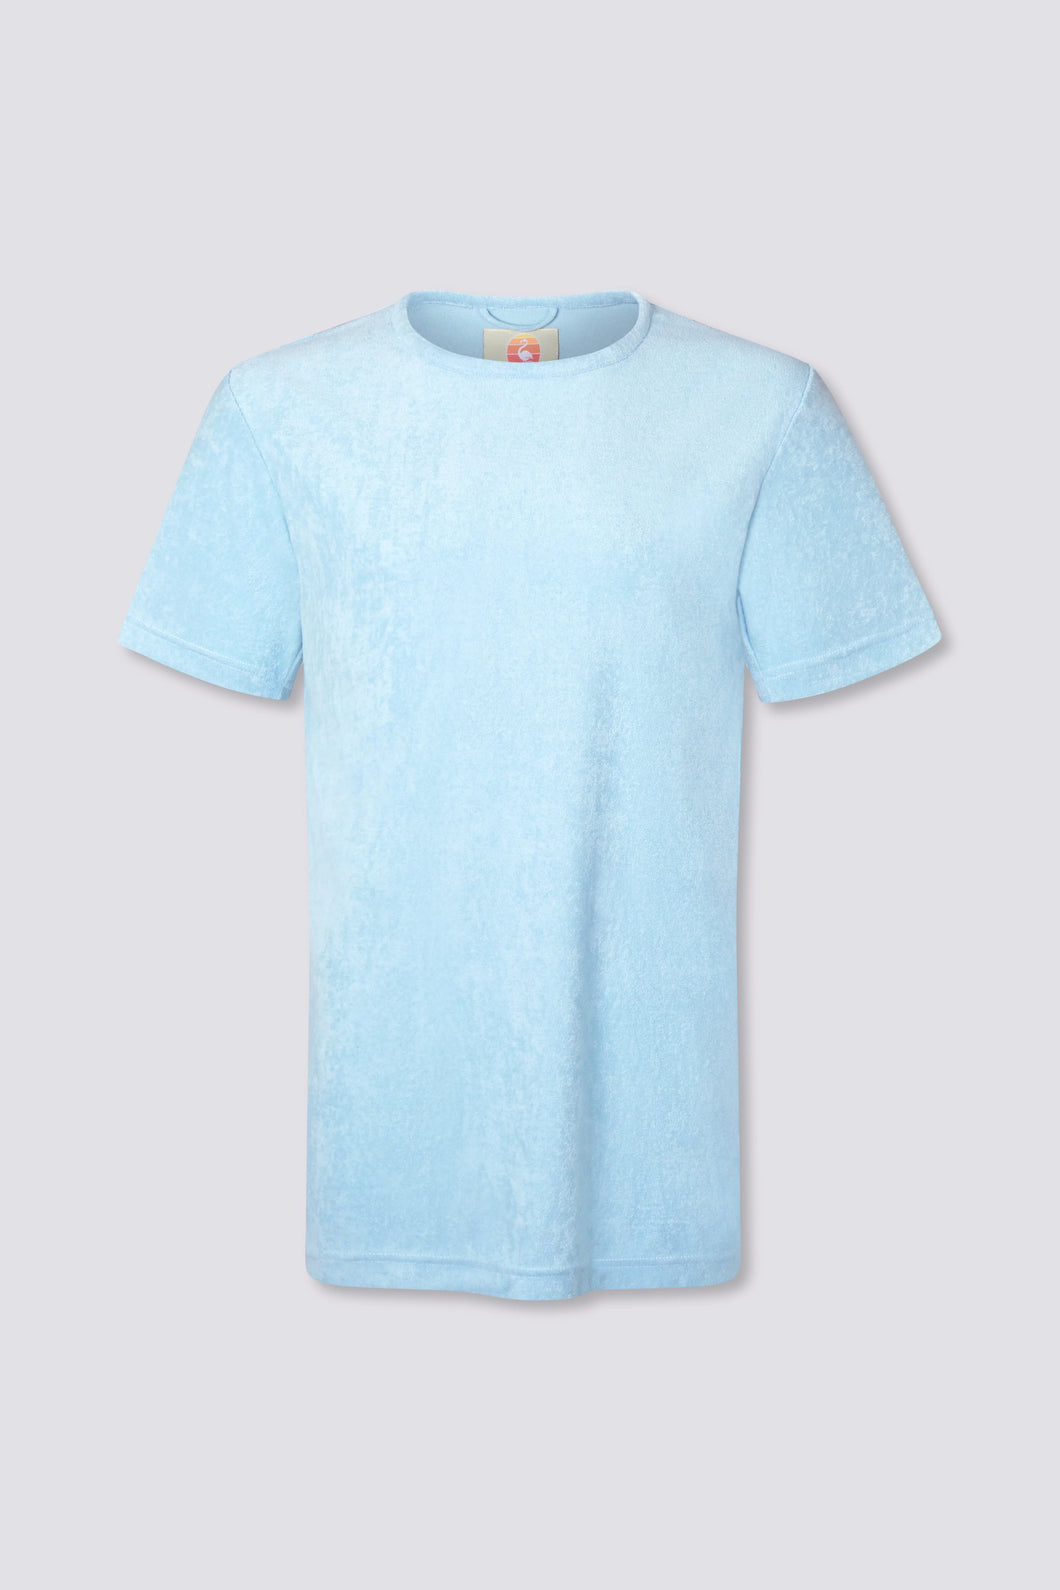 Terry Cloth Shirt - Amalfi Azure